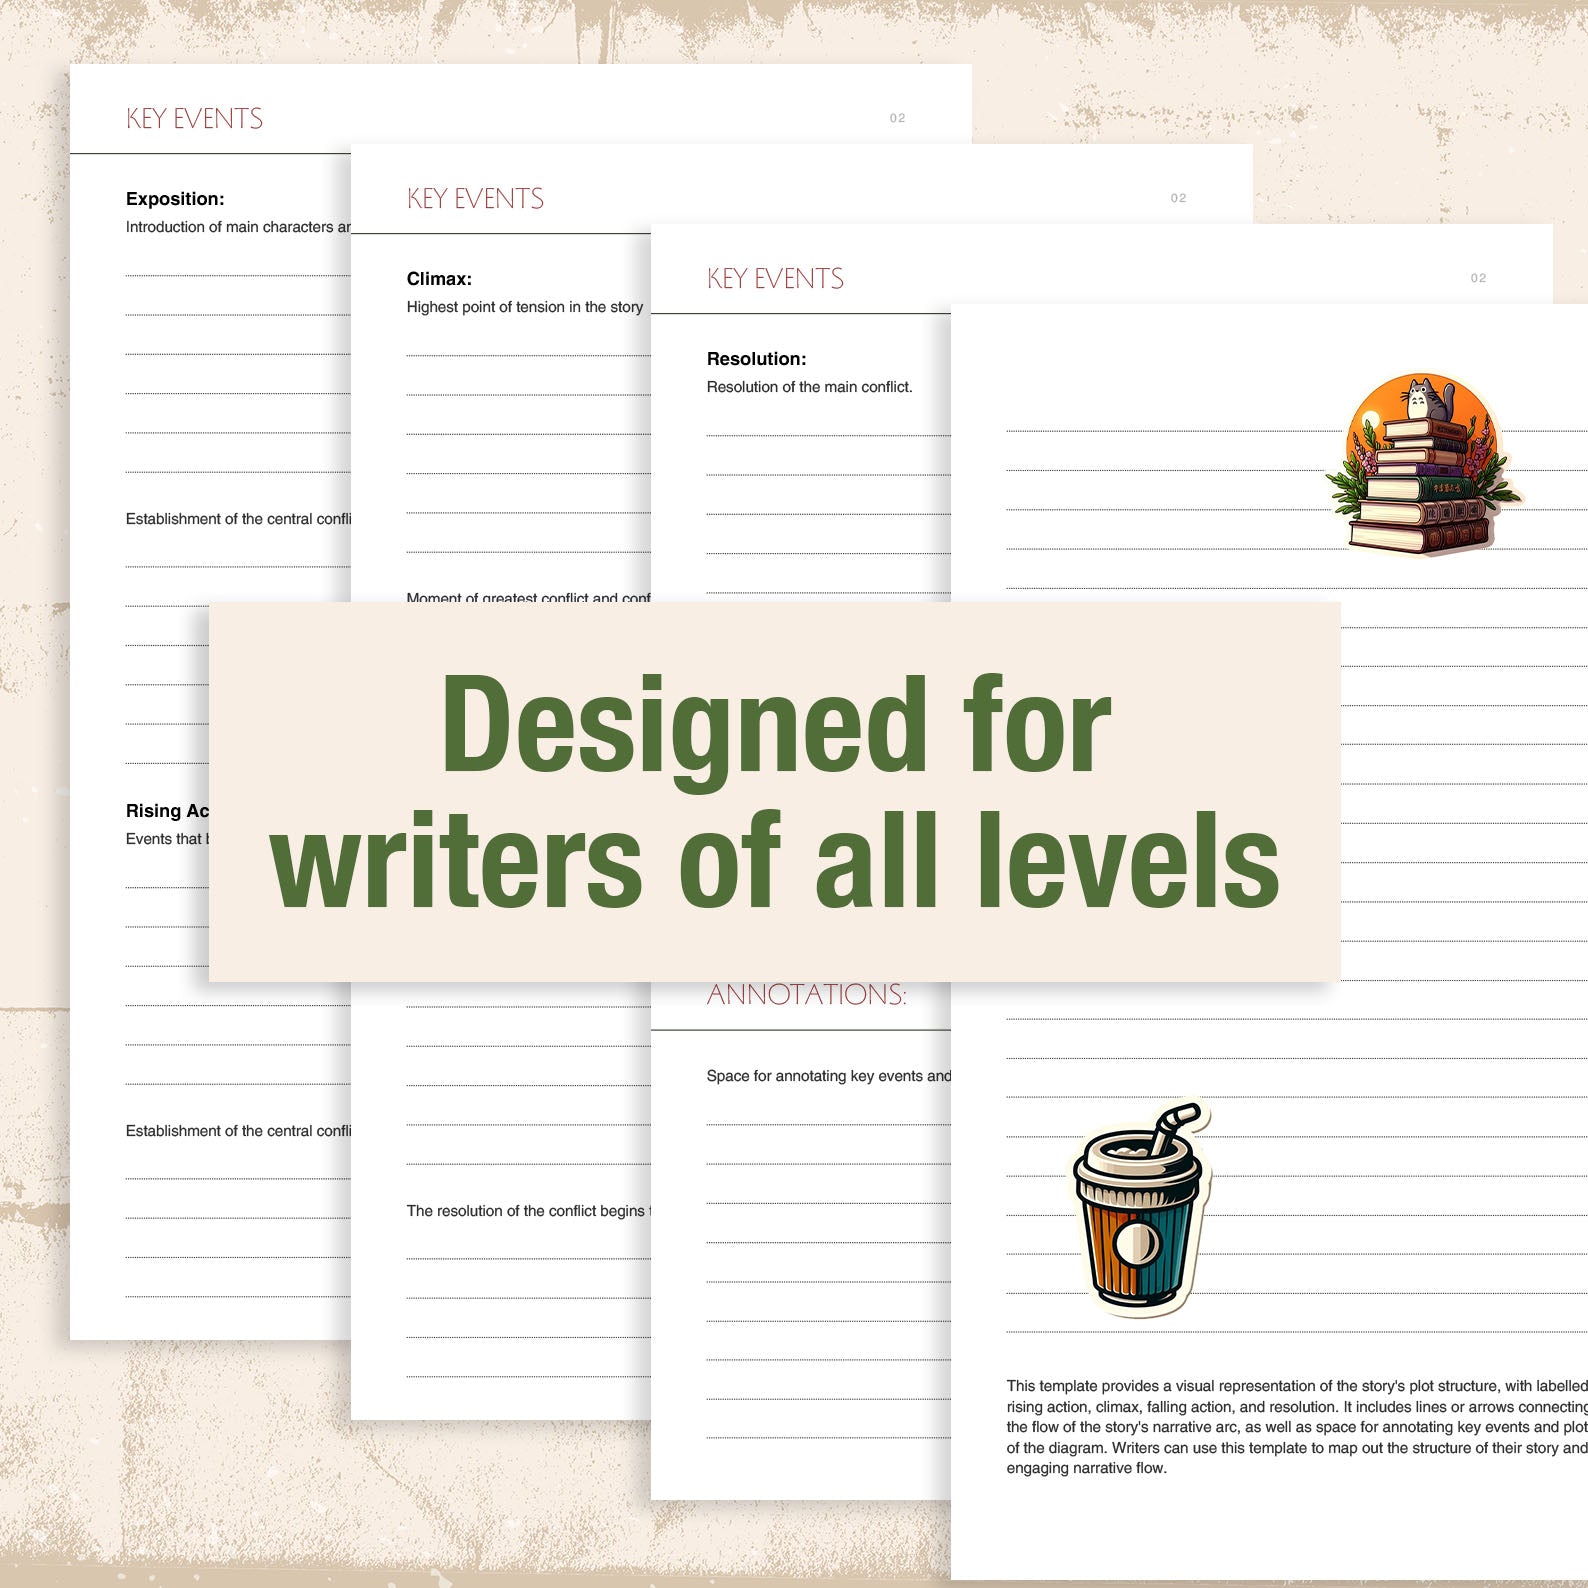 Write Your Novel  Worksheets for Aspiring Authors